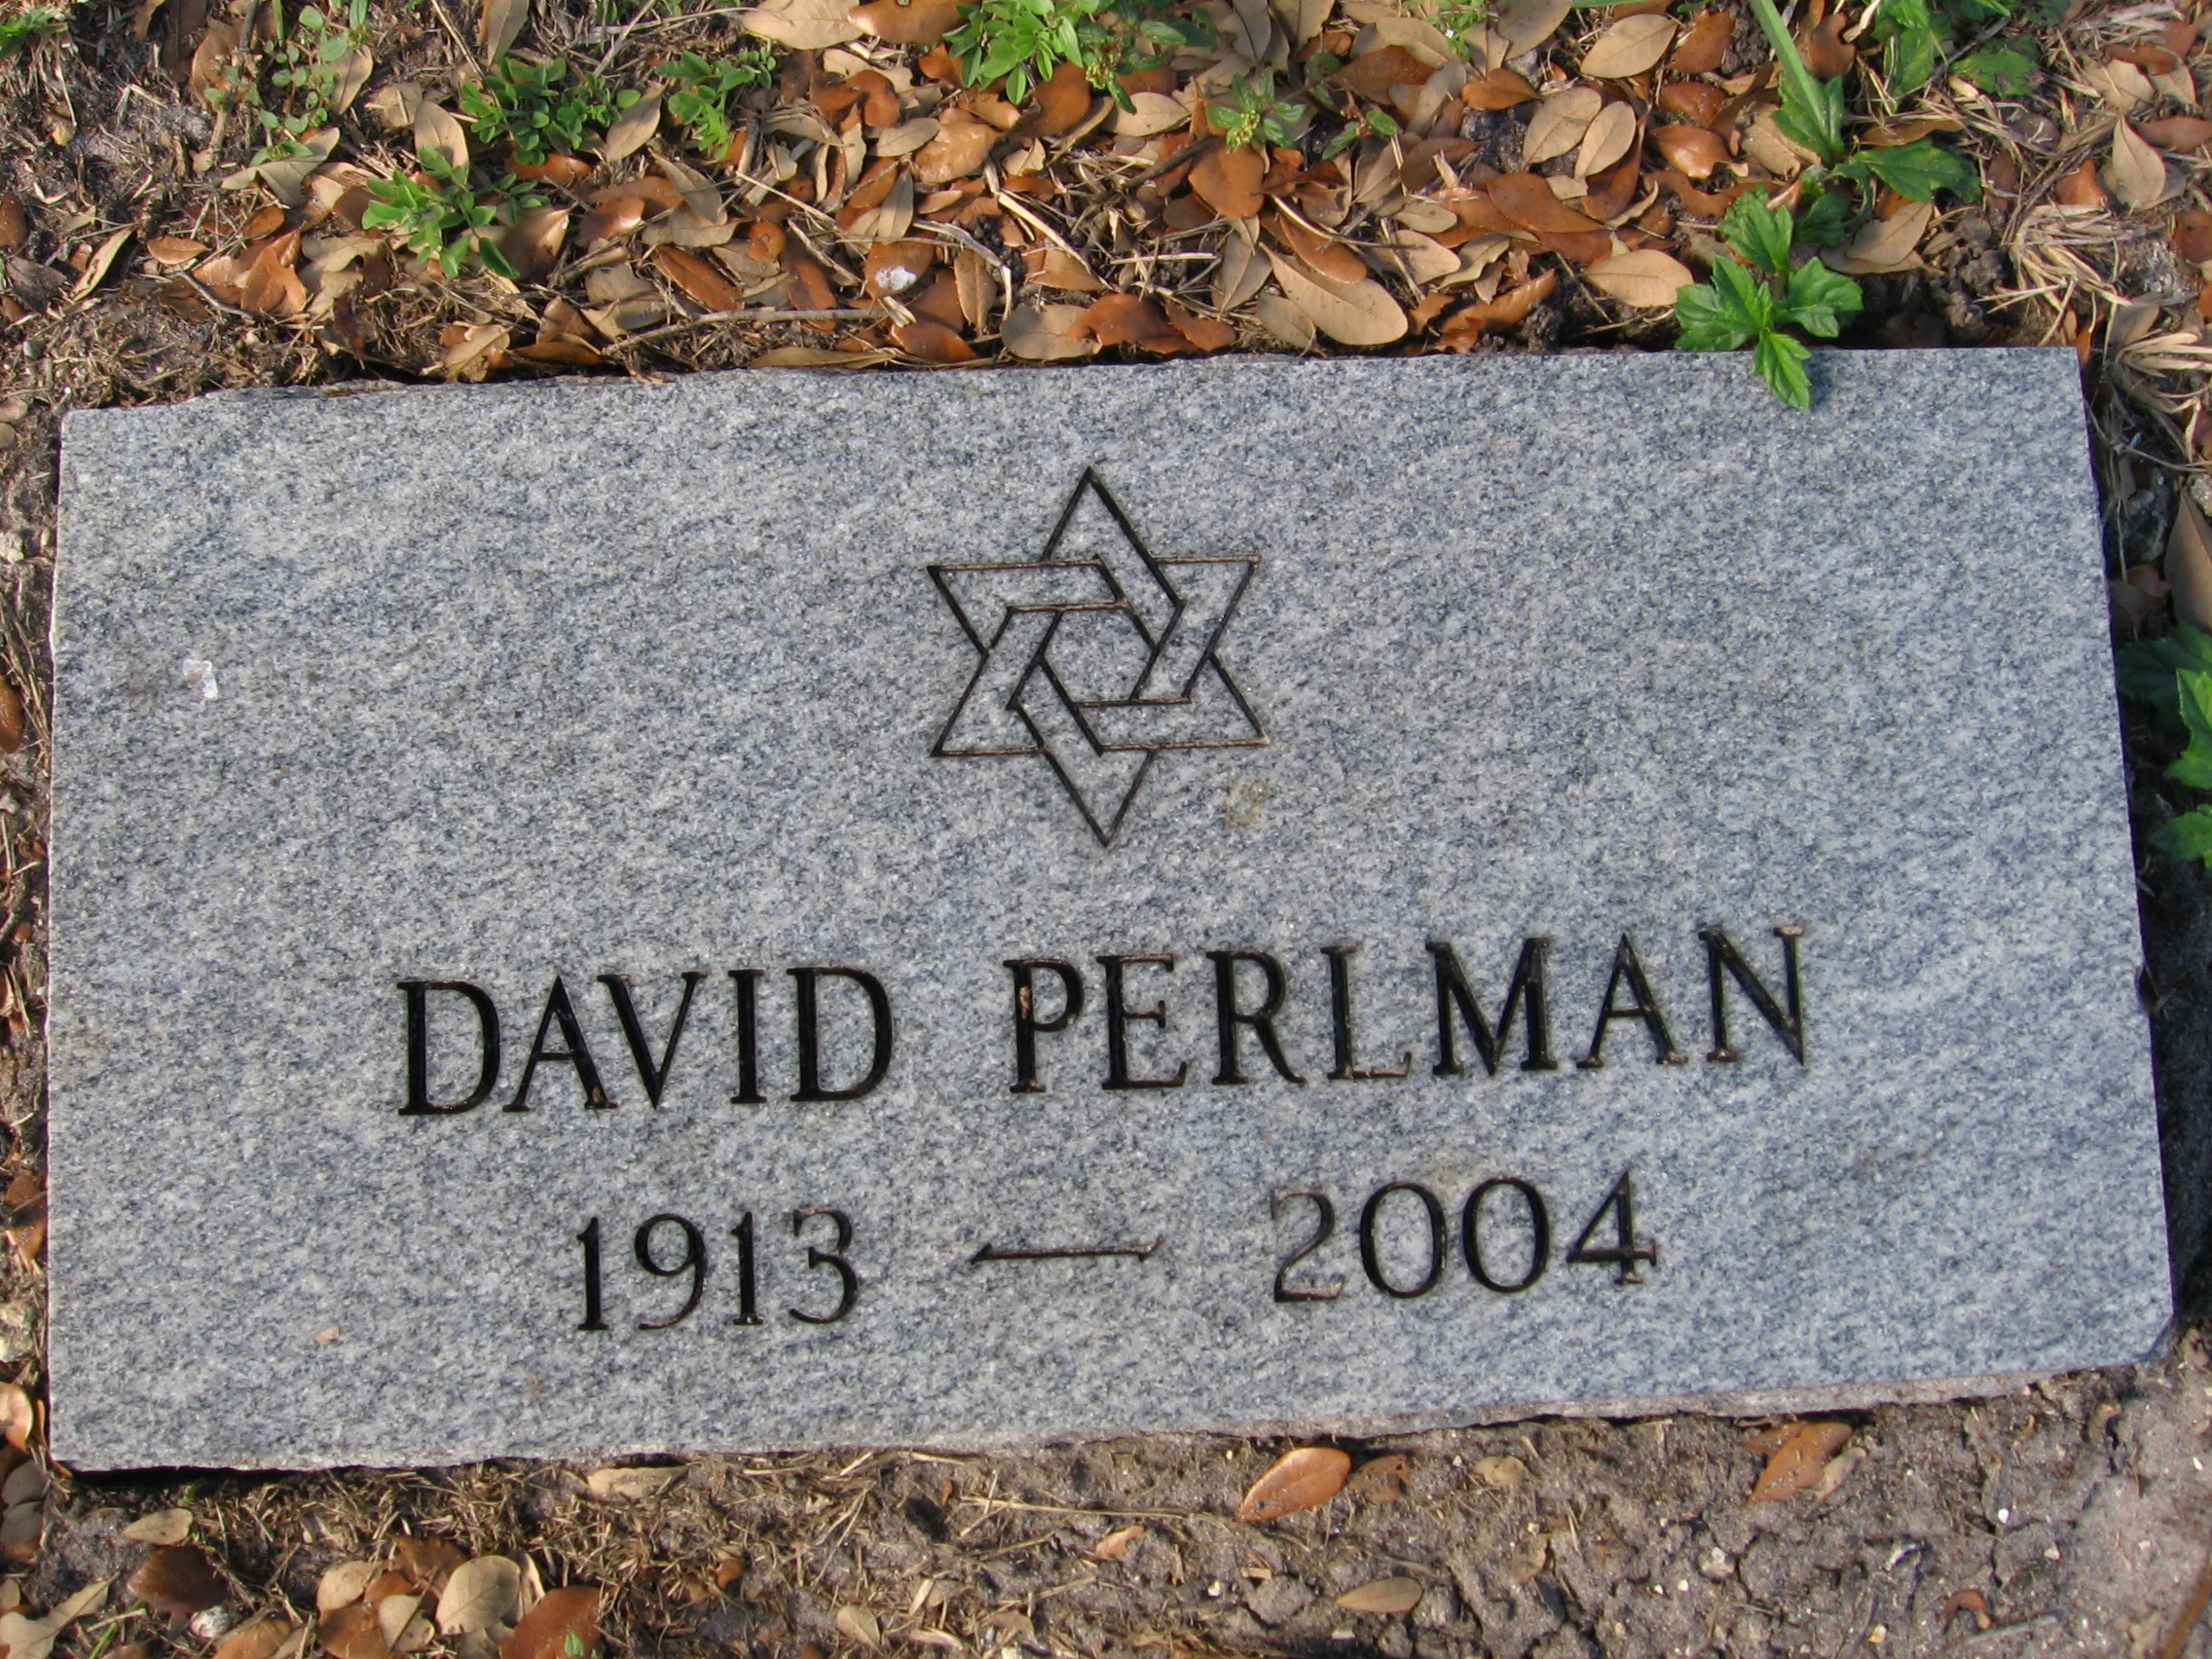 David Perlman